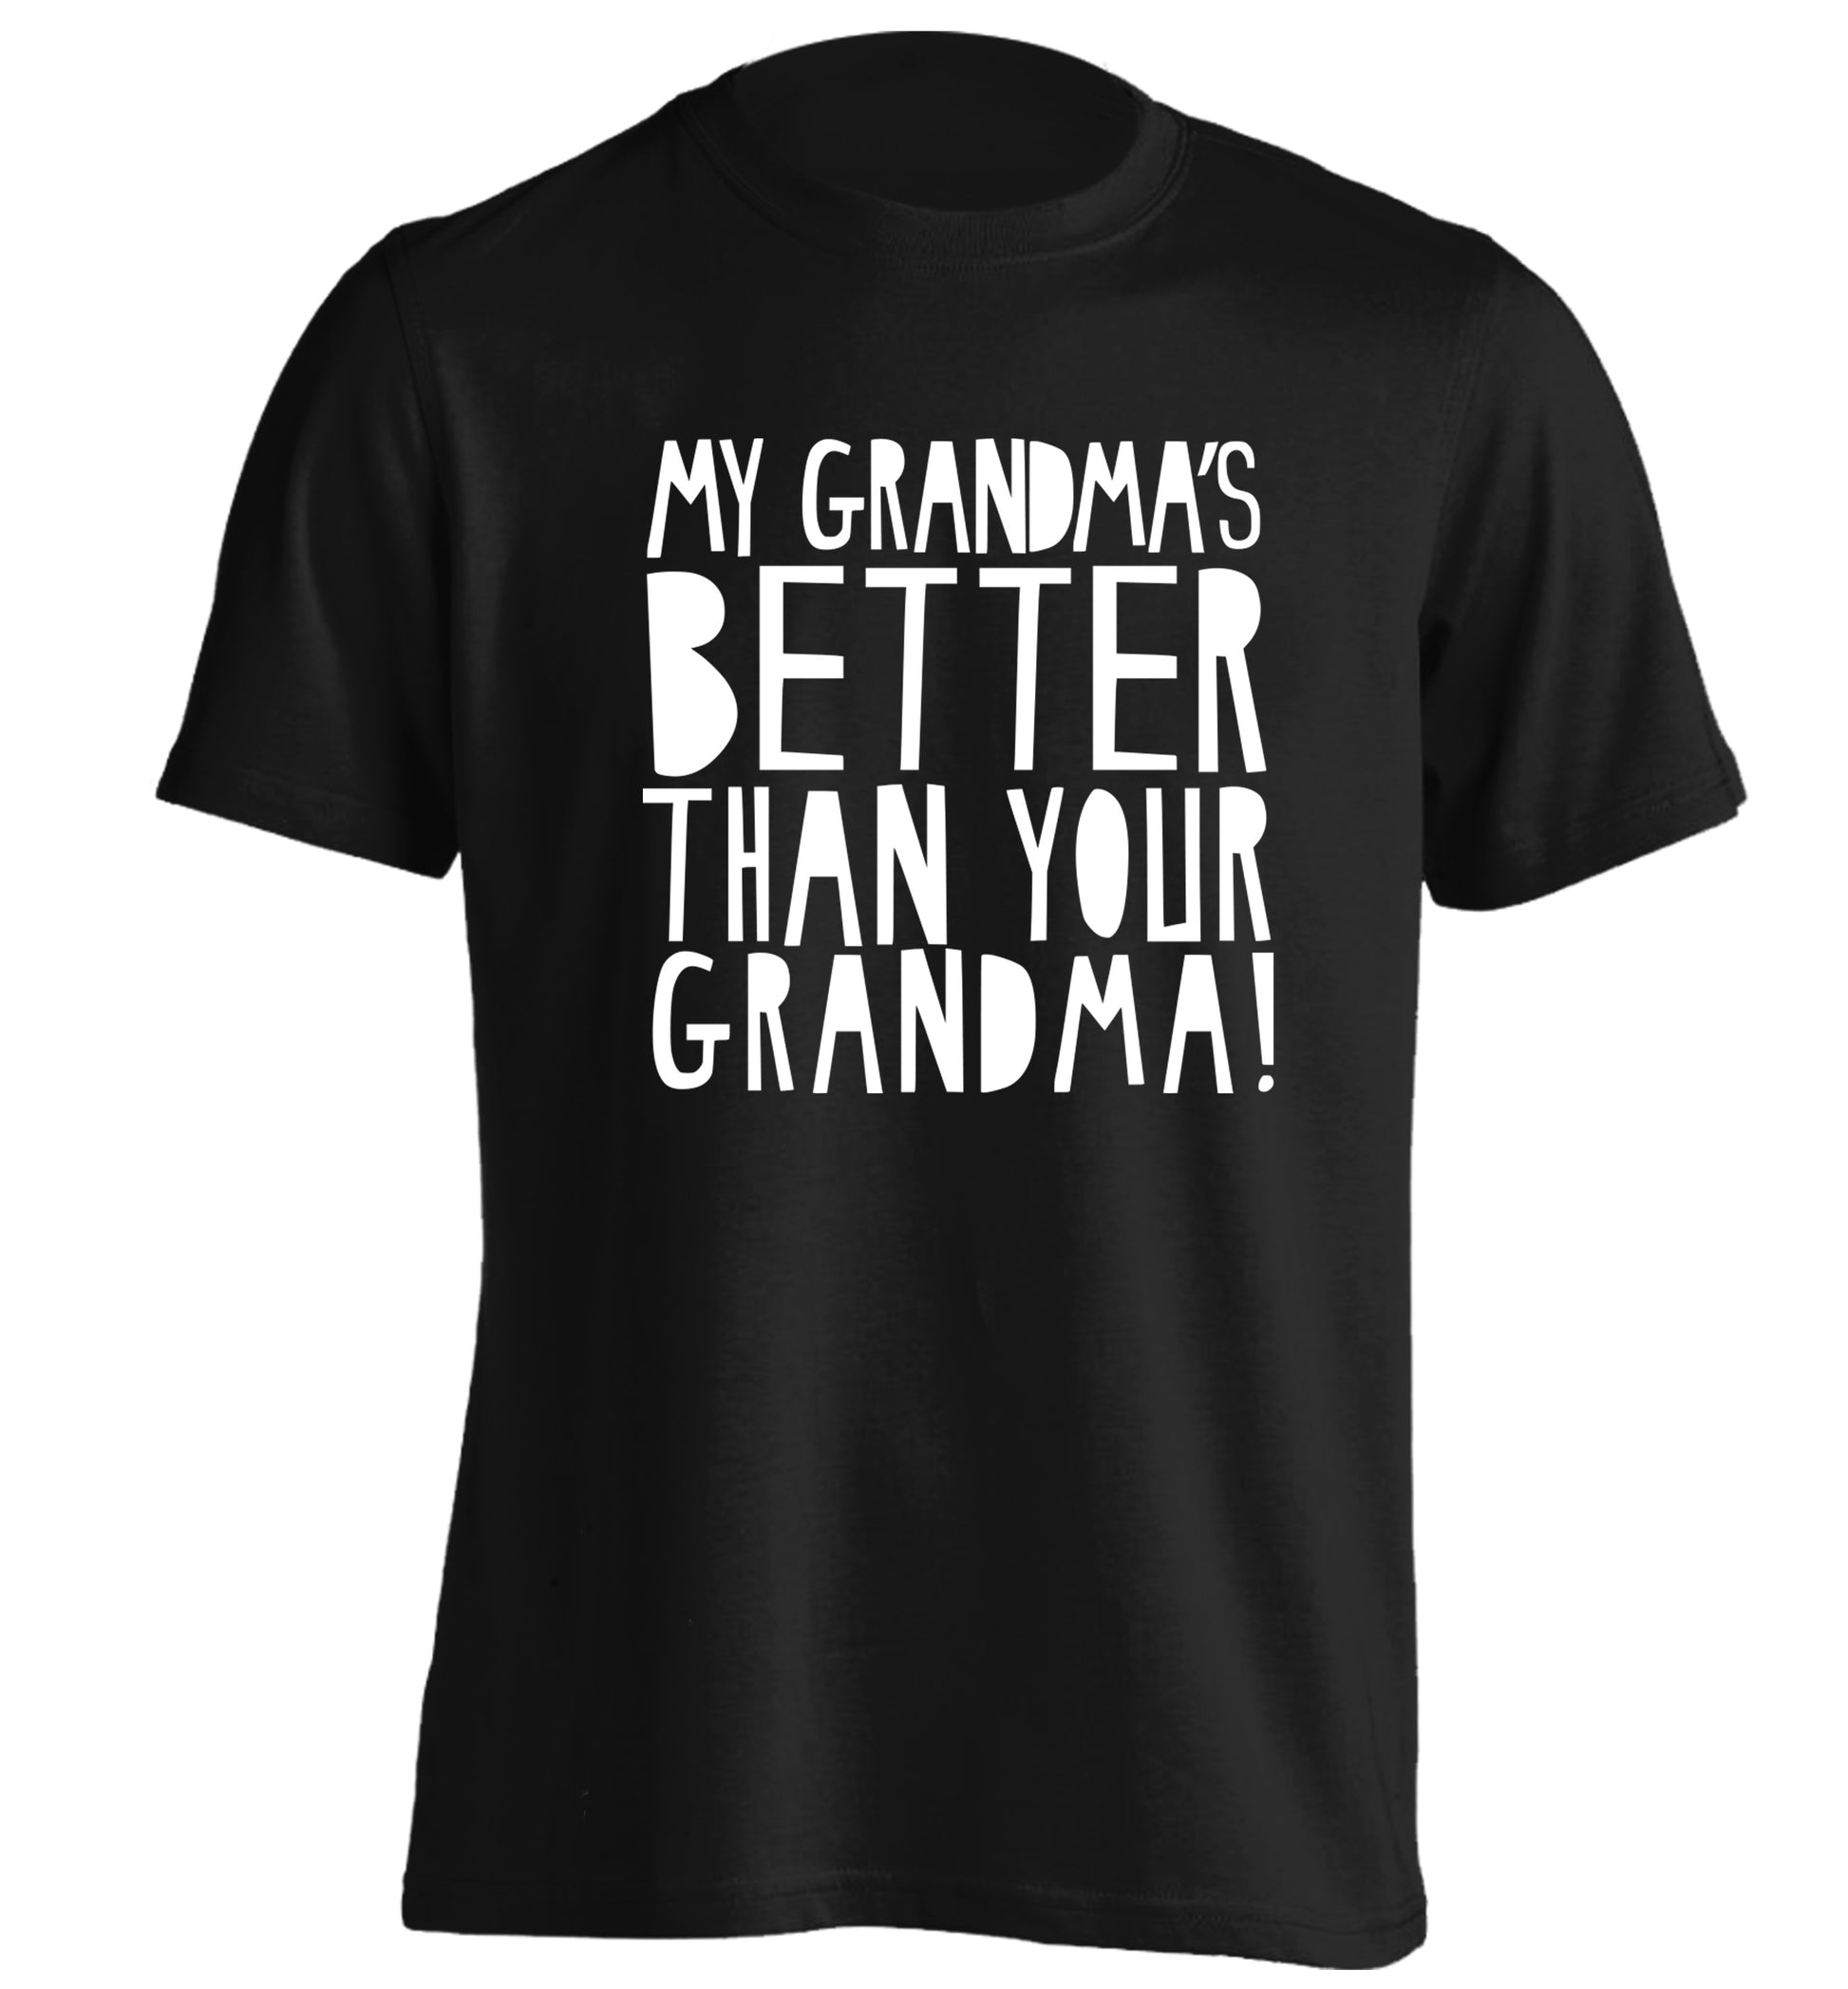 My grandma's better than your grandma adults unisex black Tshirt 2XL